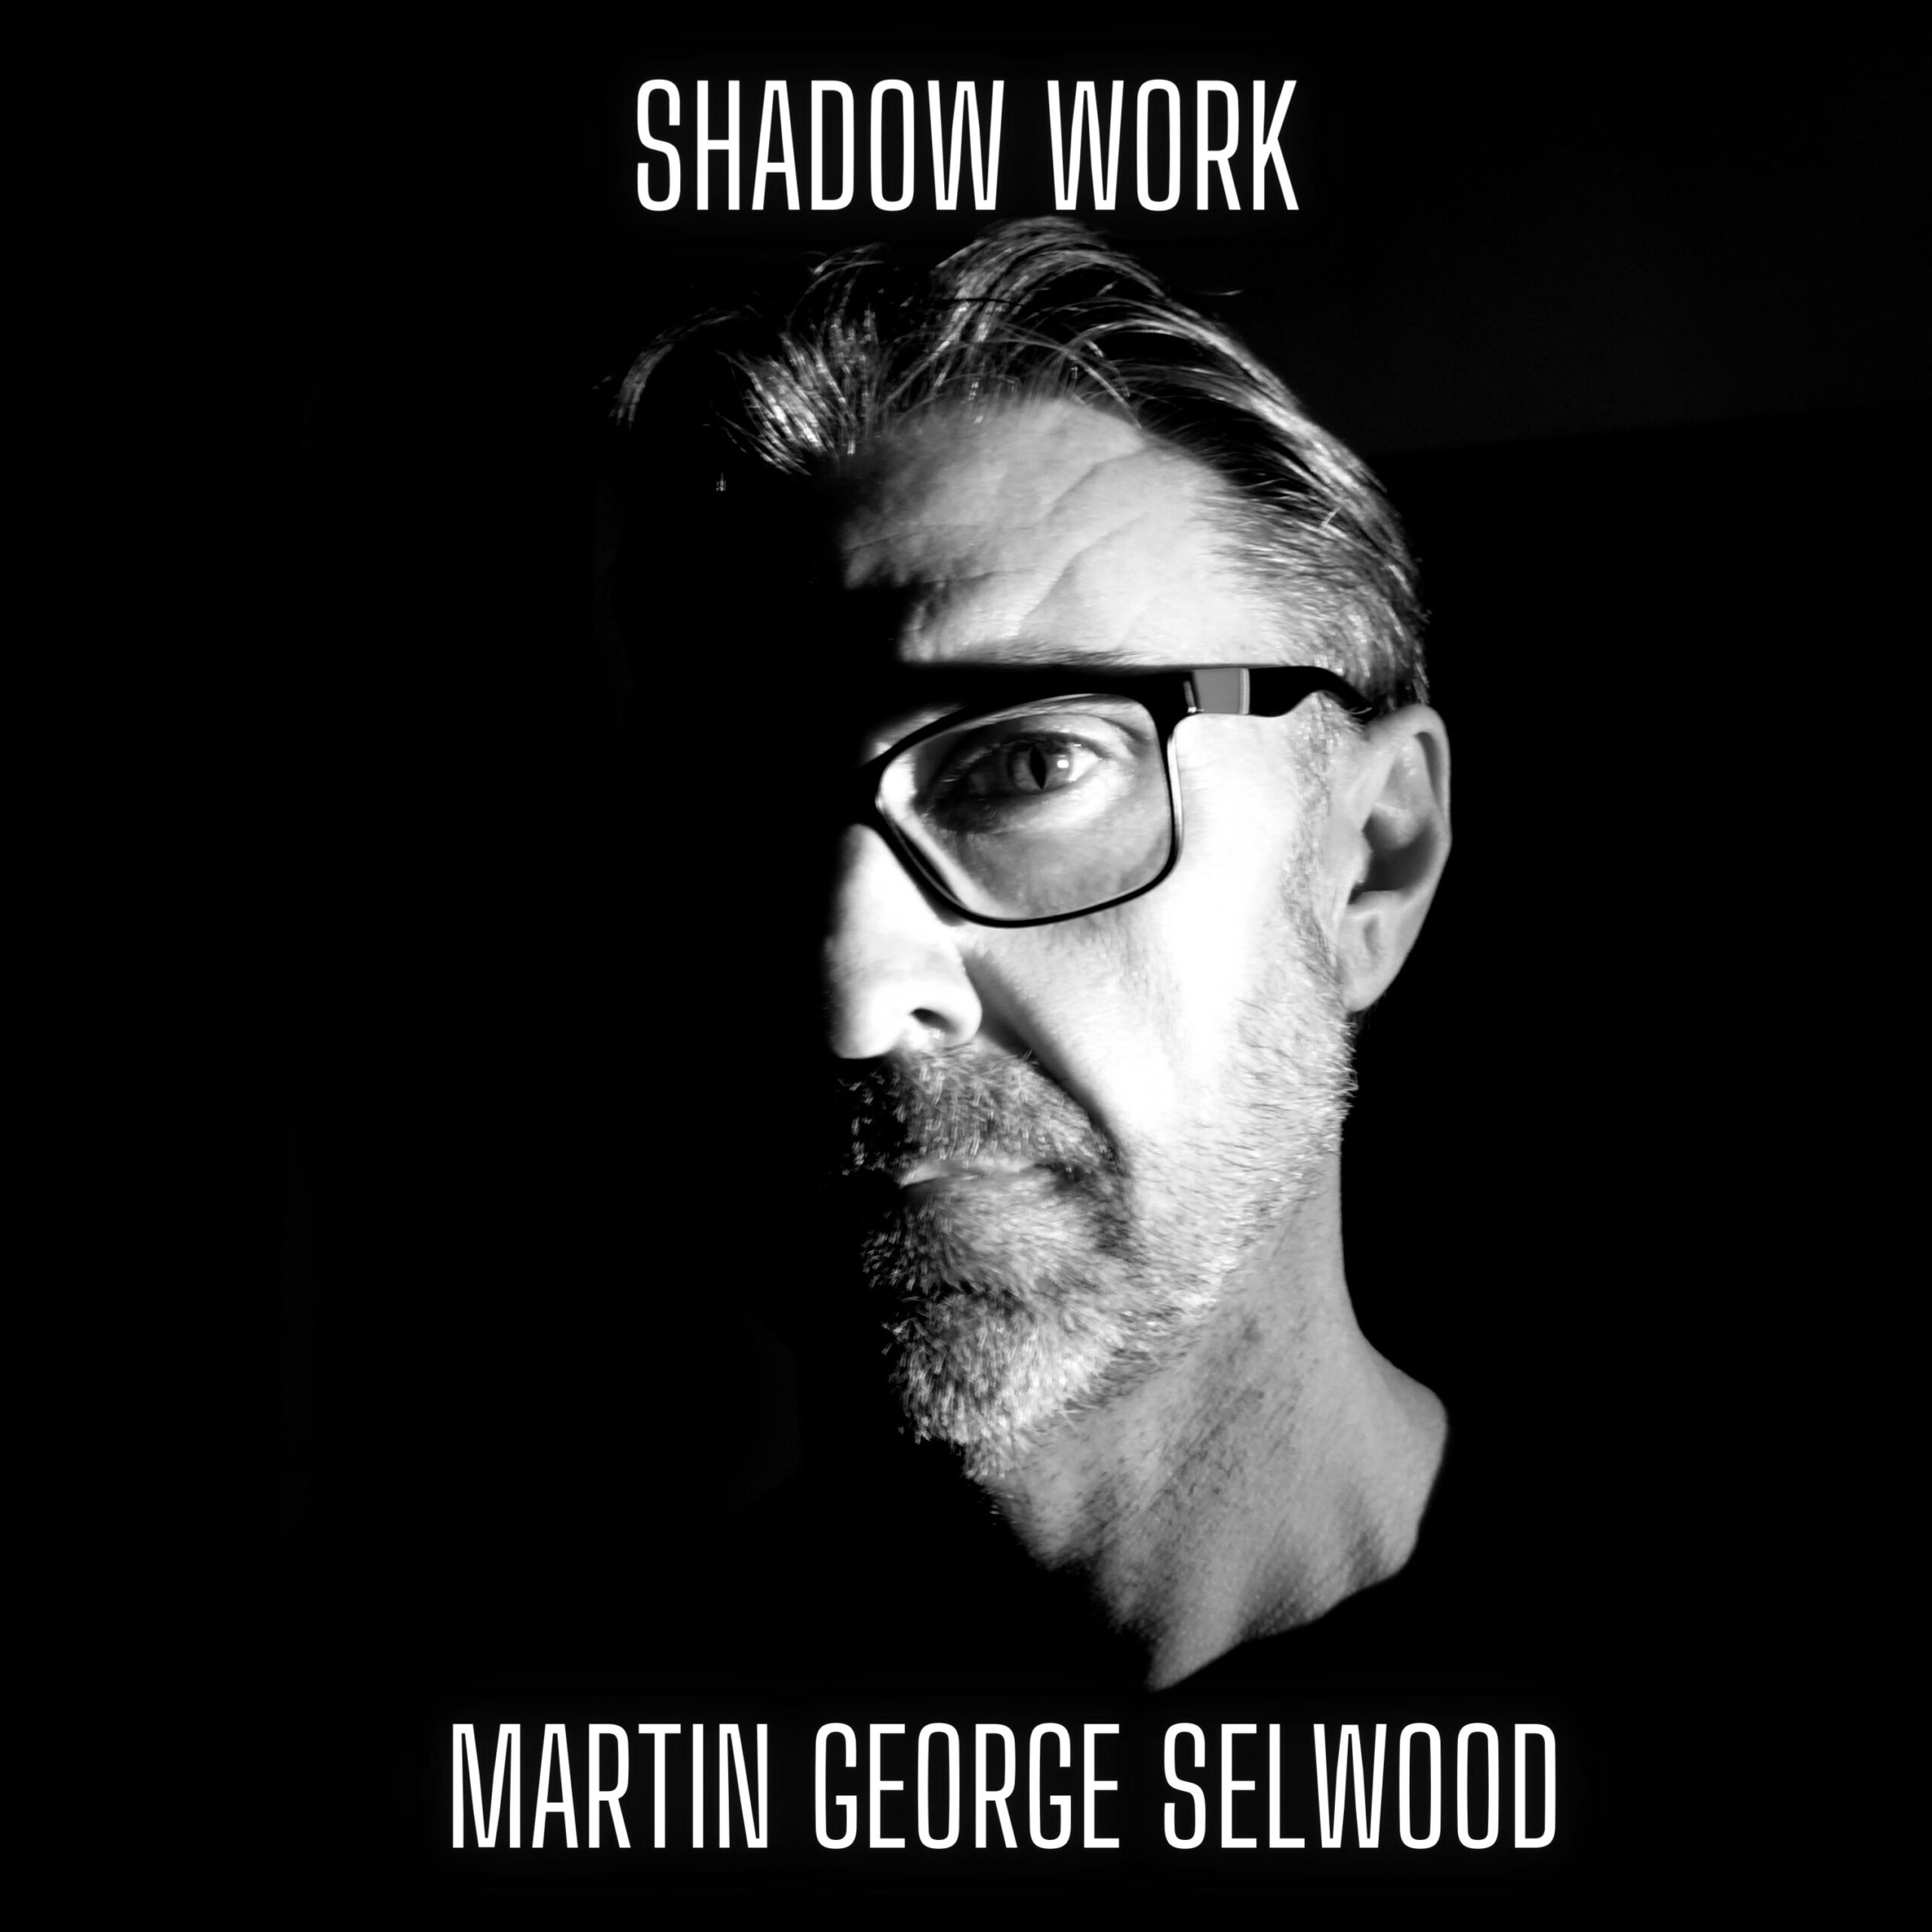 Composing - MARTIN GEORGE SELWOOD